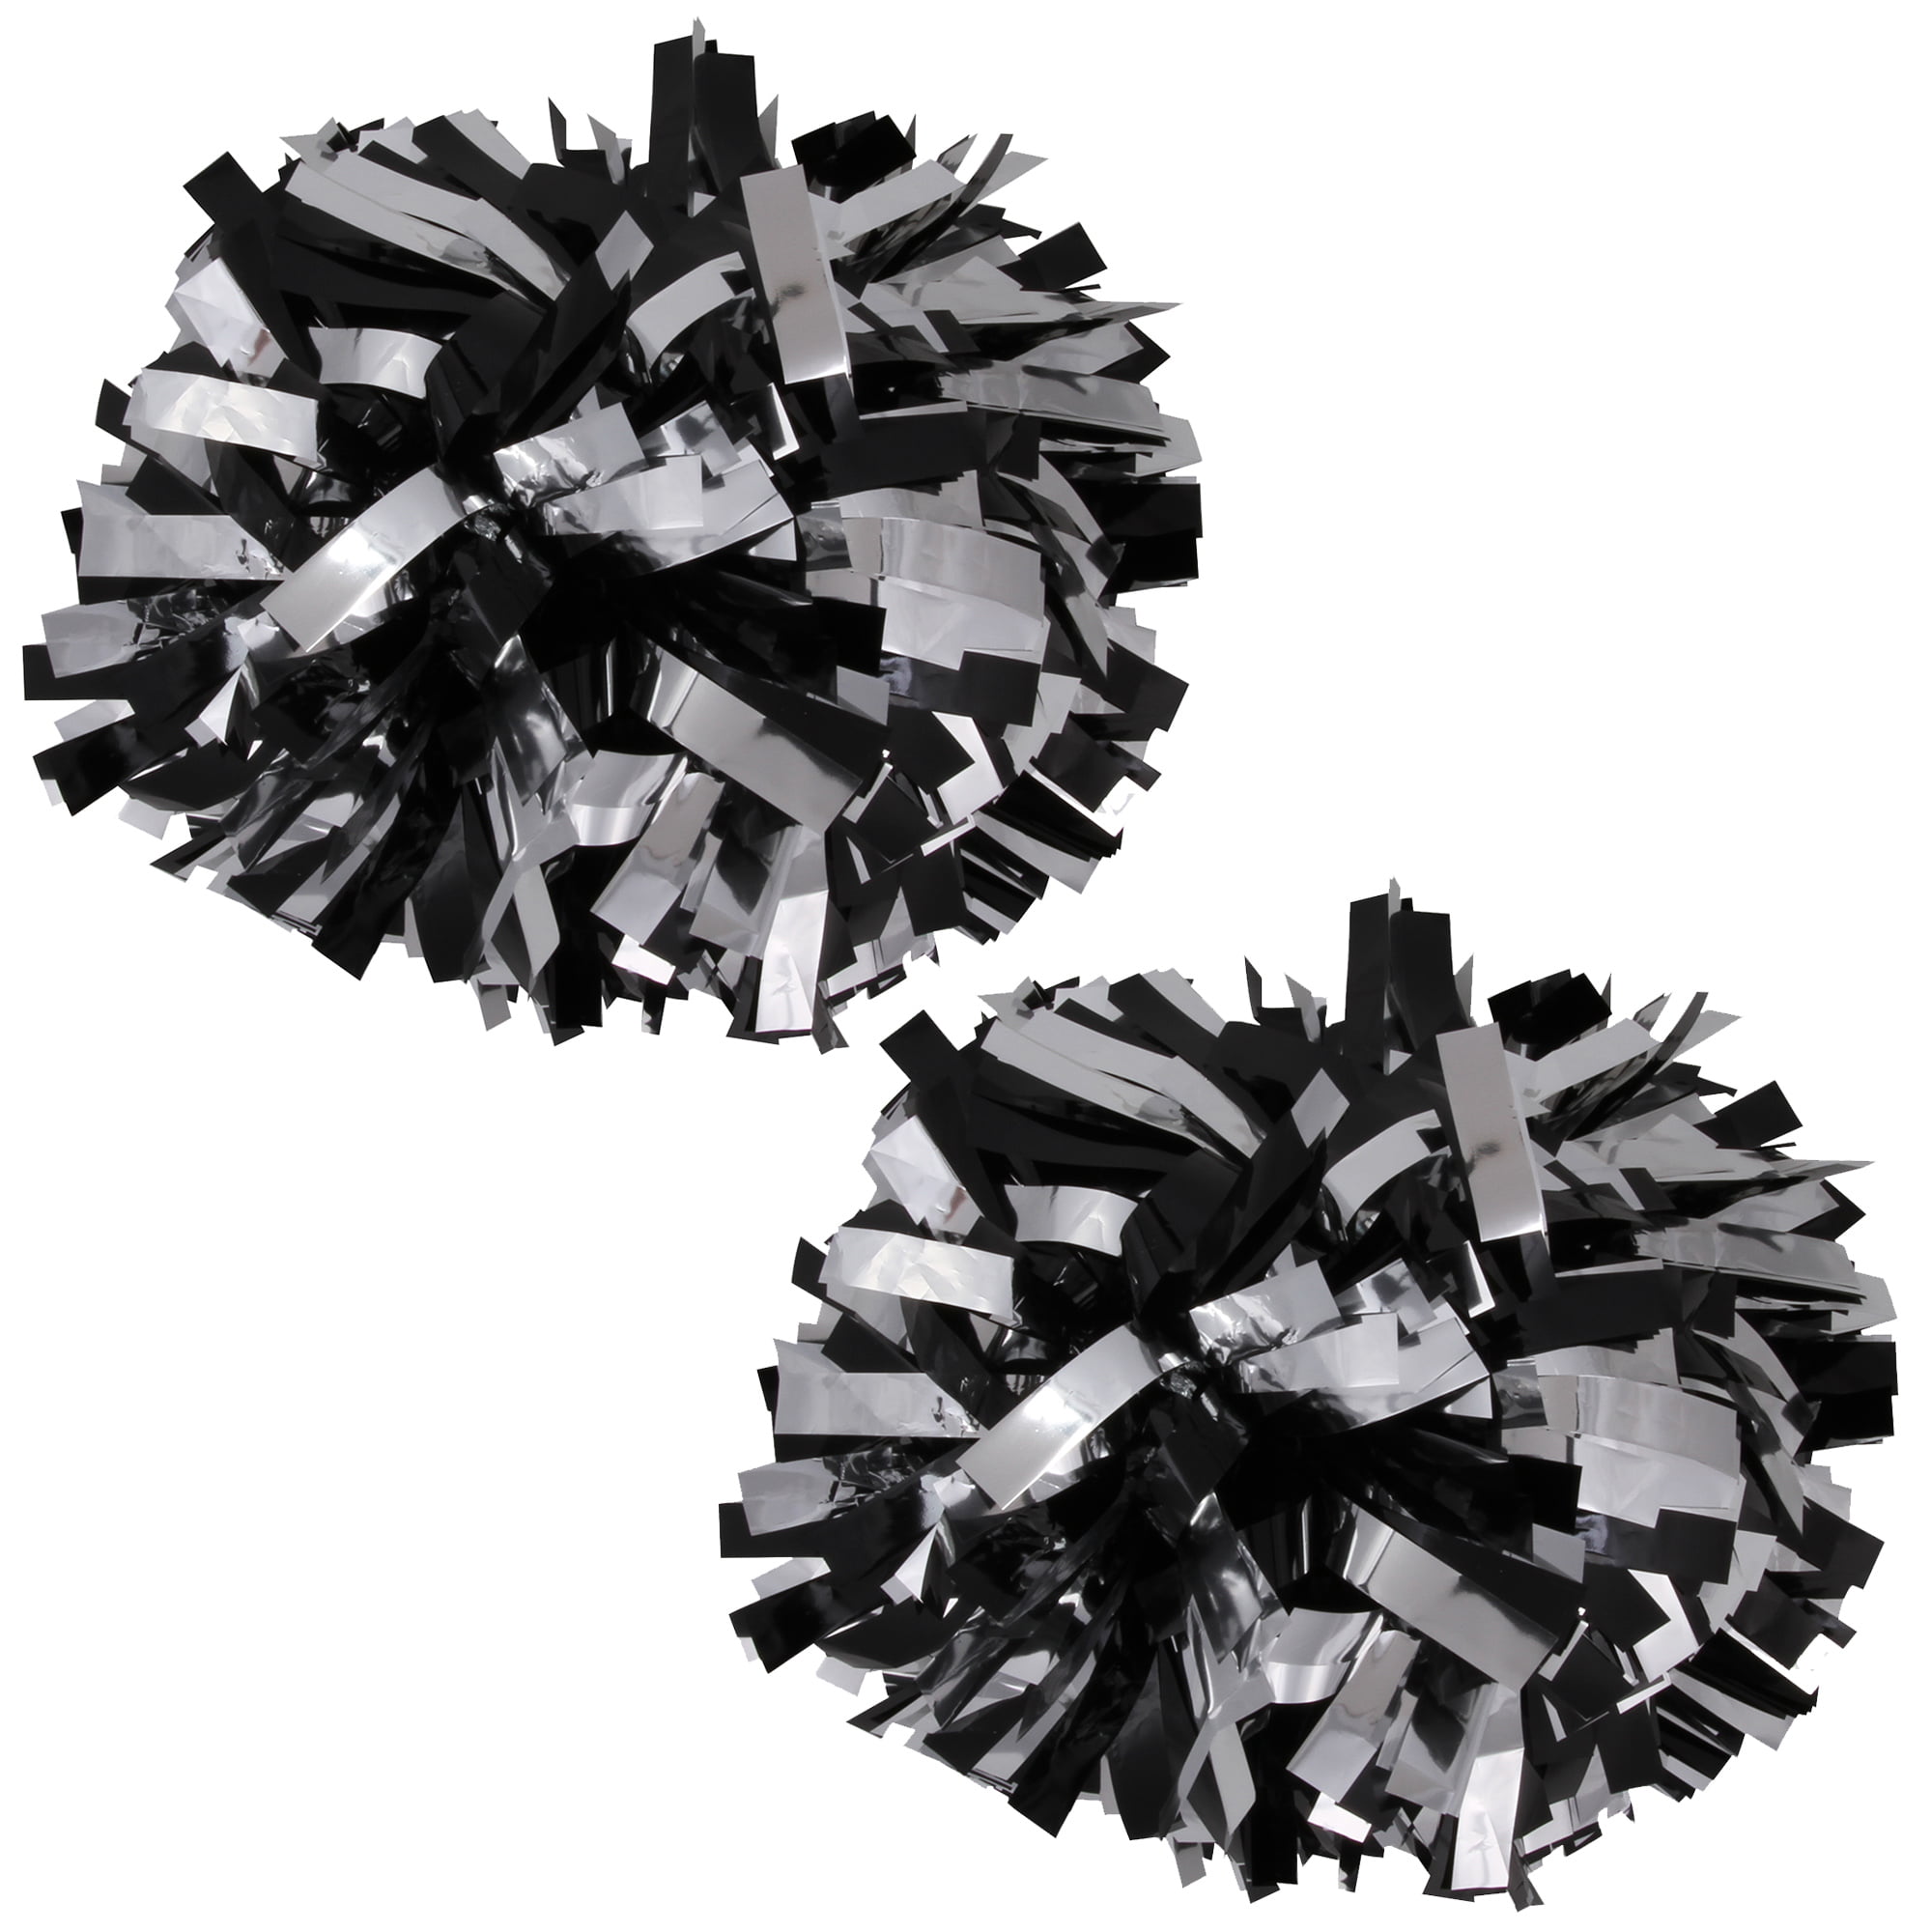 Metallic Cheer Pom Poms Cheerleading Cheerleader Gear 2 pieces one pair  poms(Black/Siver)